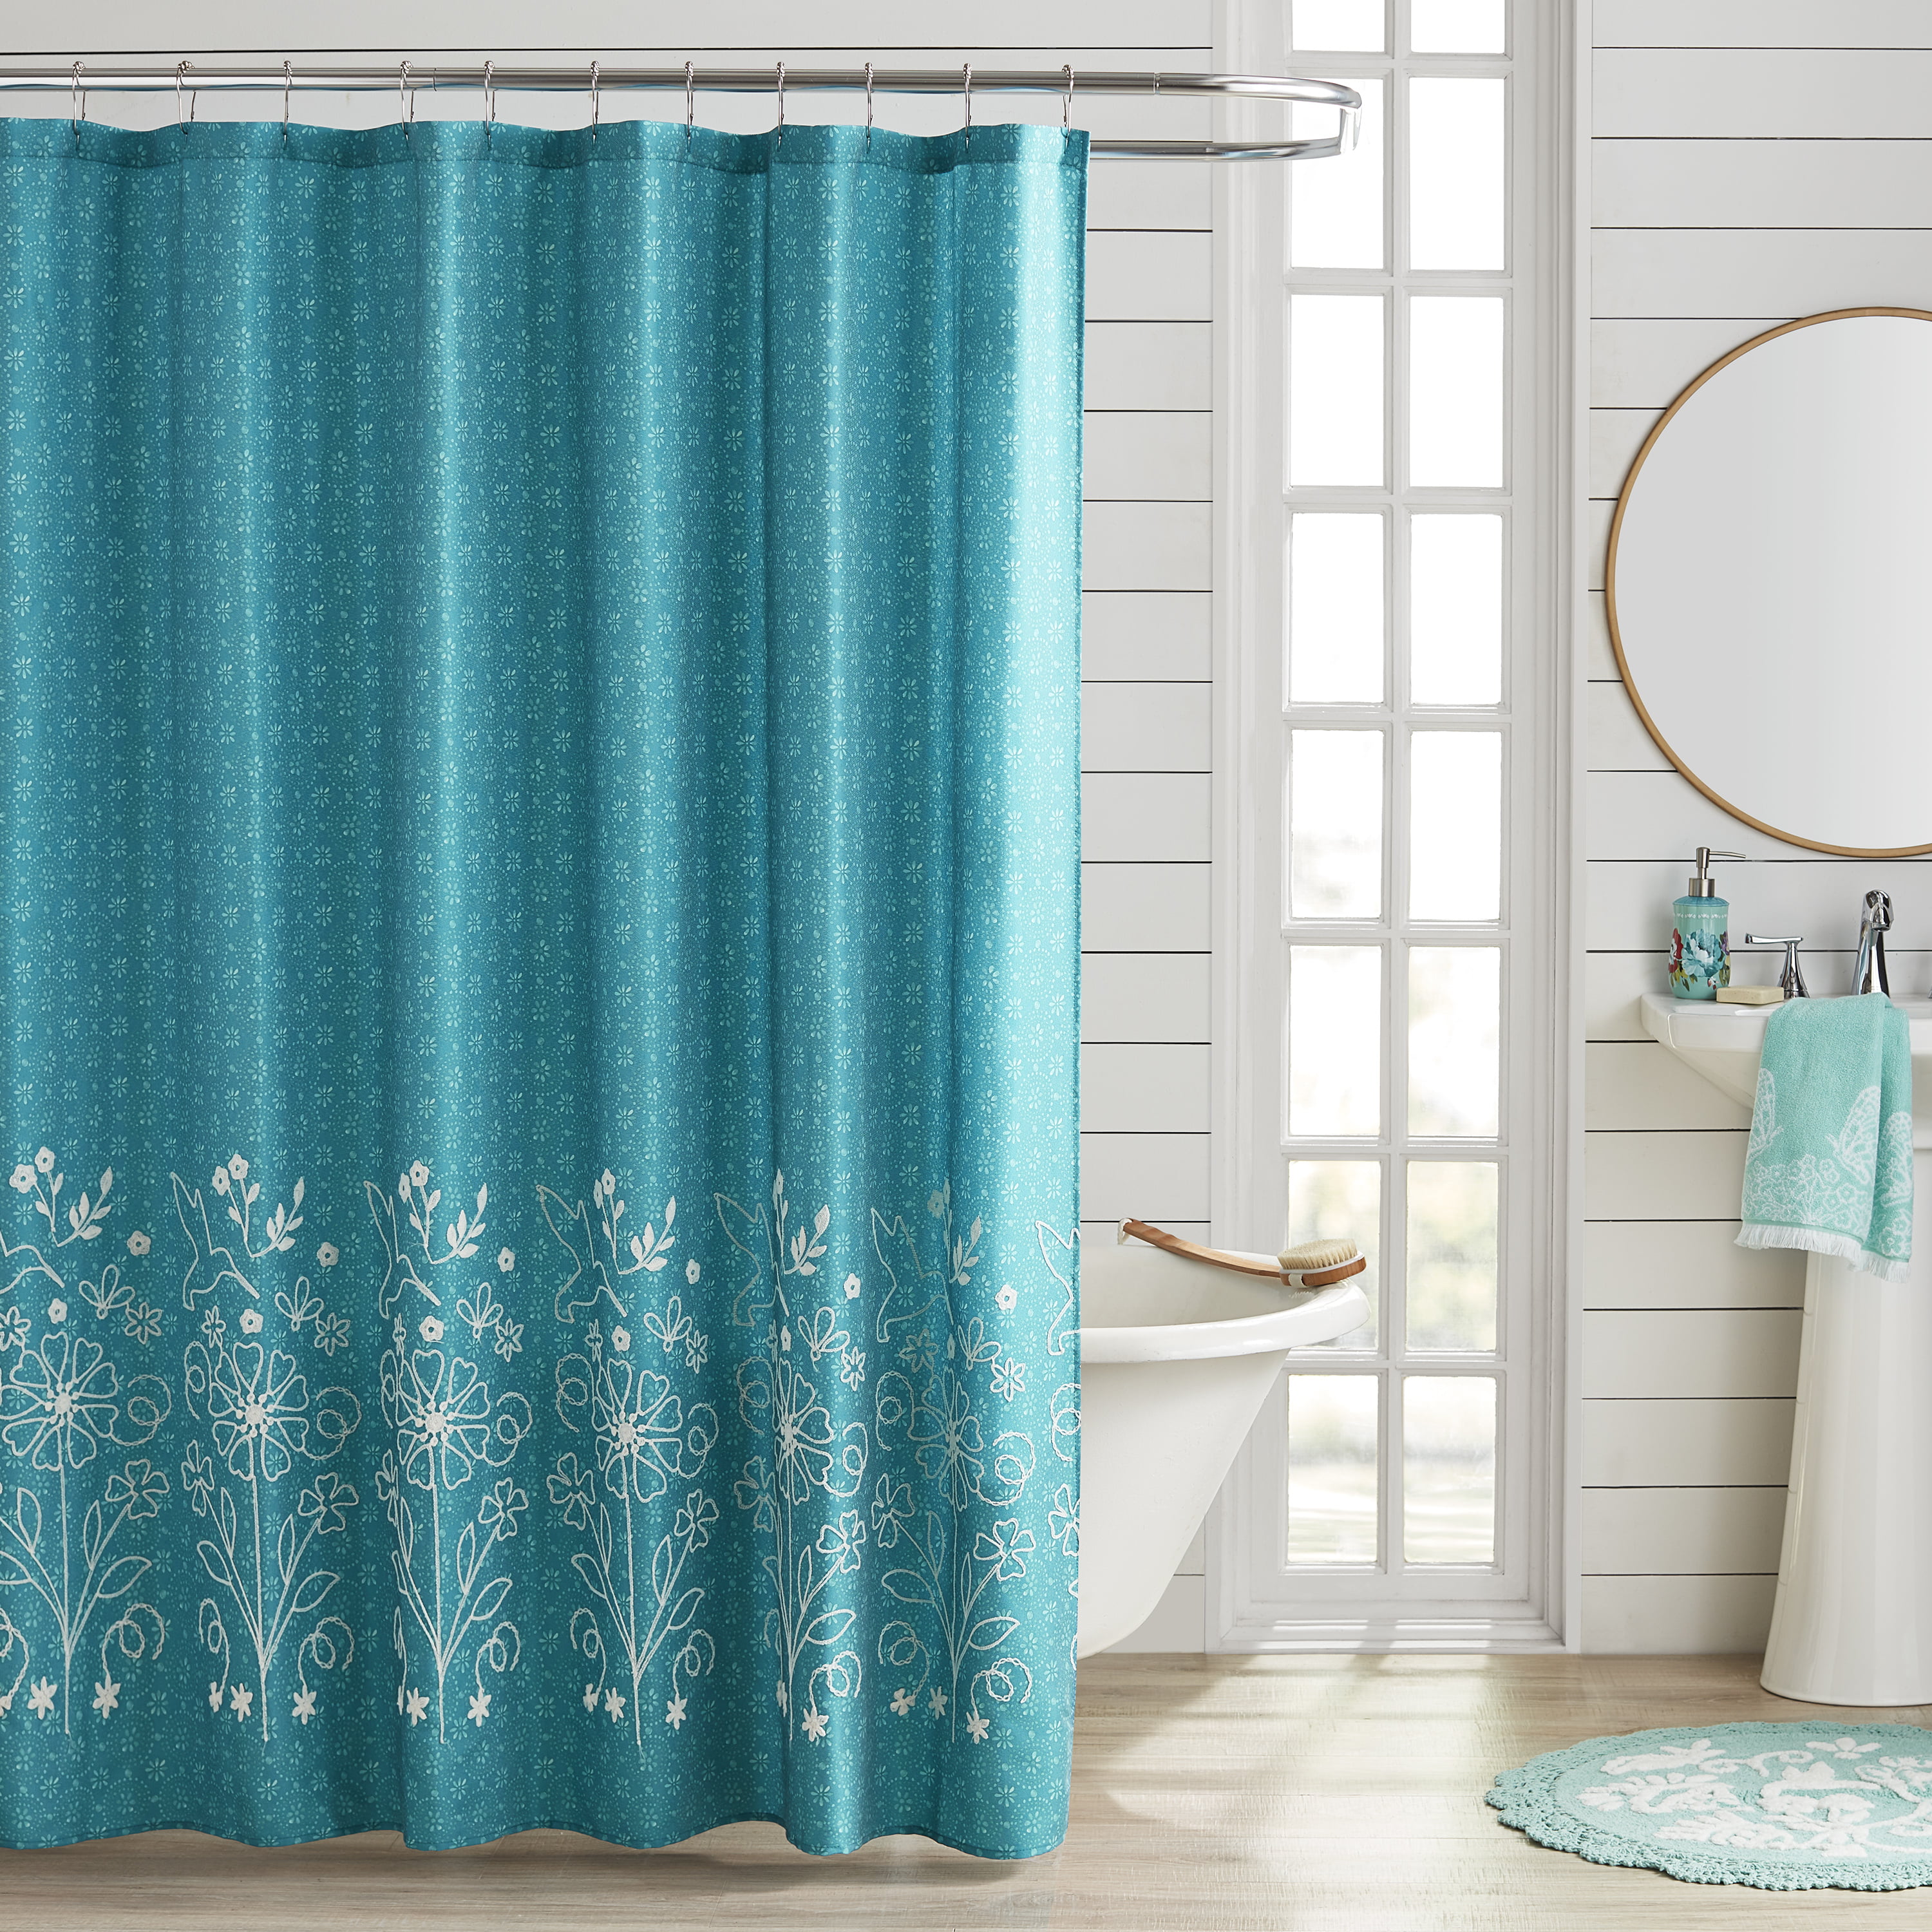 Wooden Board Stars and Stripes Shower Curtain Bathroom Decor Fabric & 12hooks 